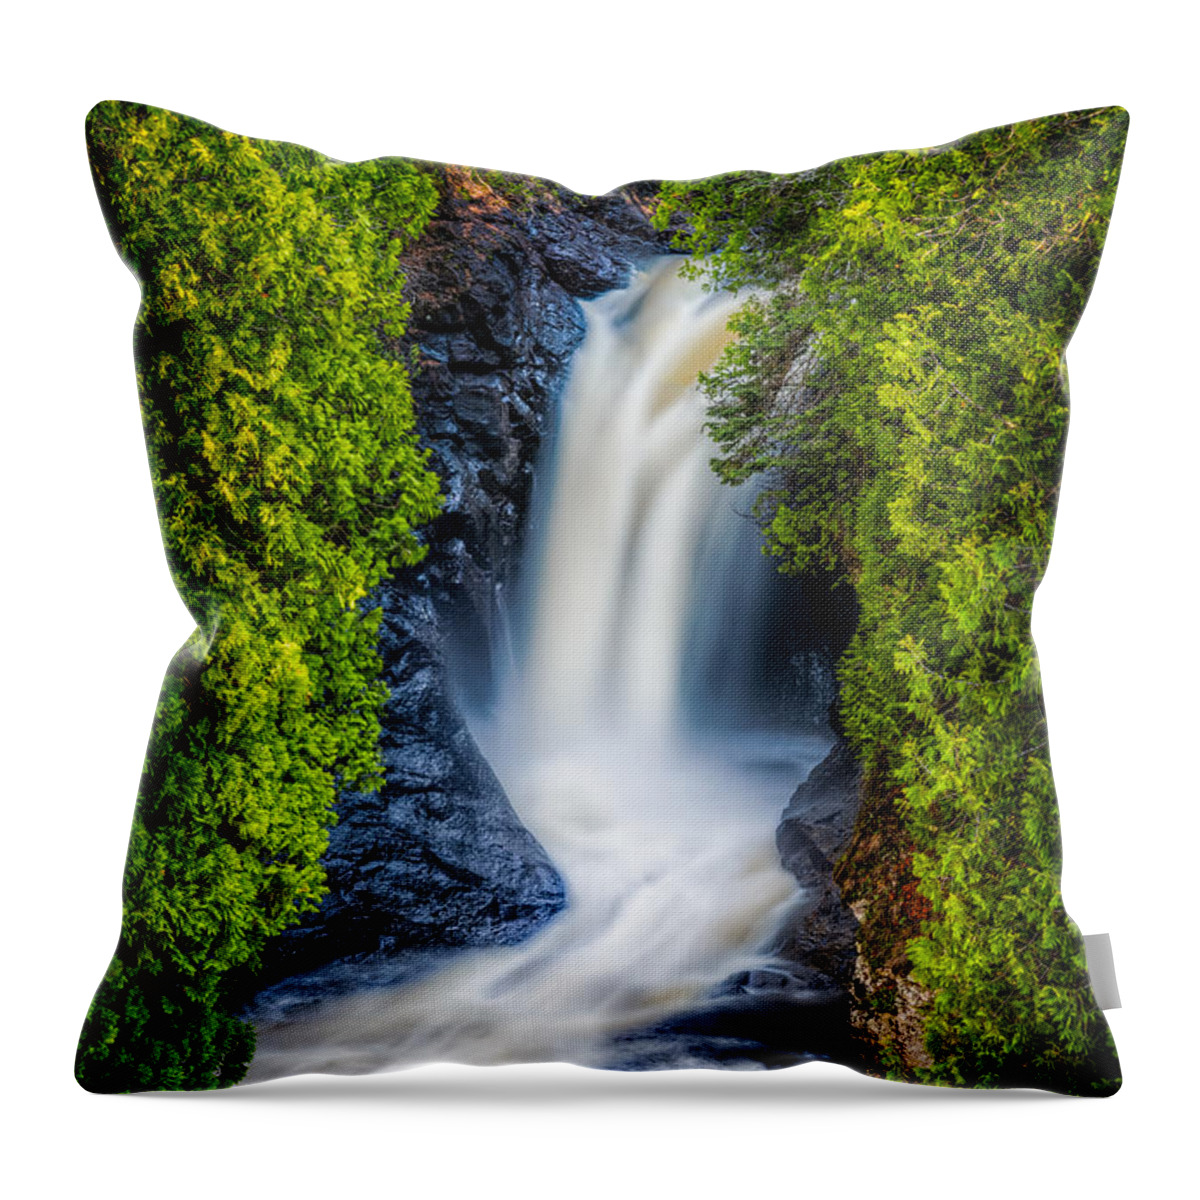 Flowing Throw Pillow featuring the photograph Cascade - lower falls by Rikk Flohr